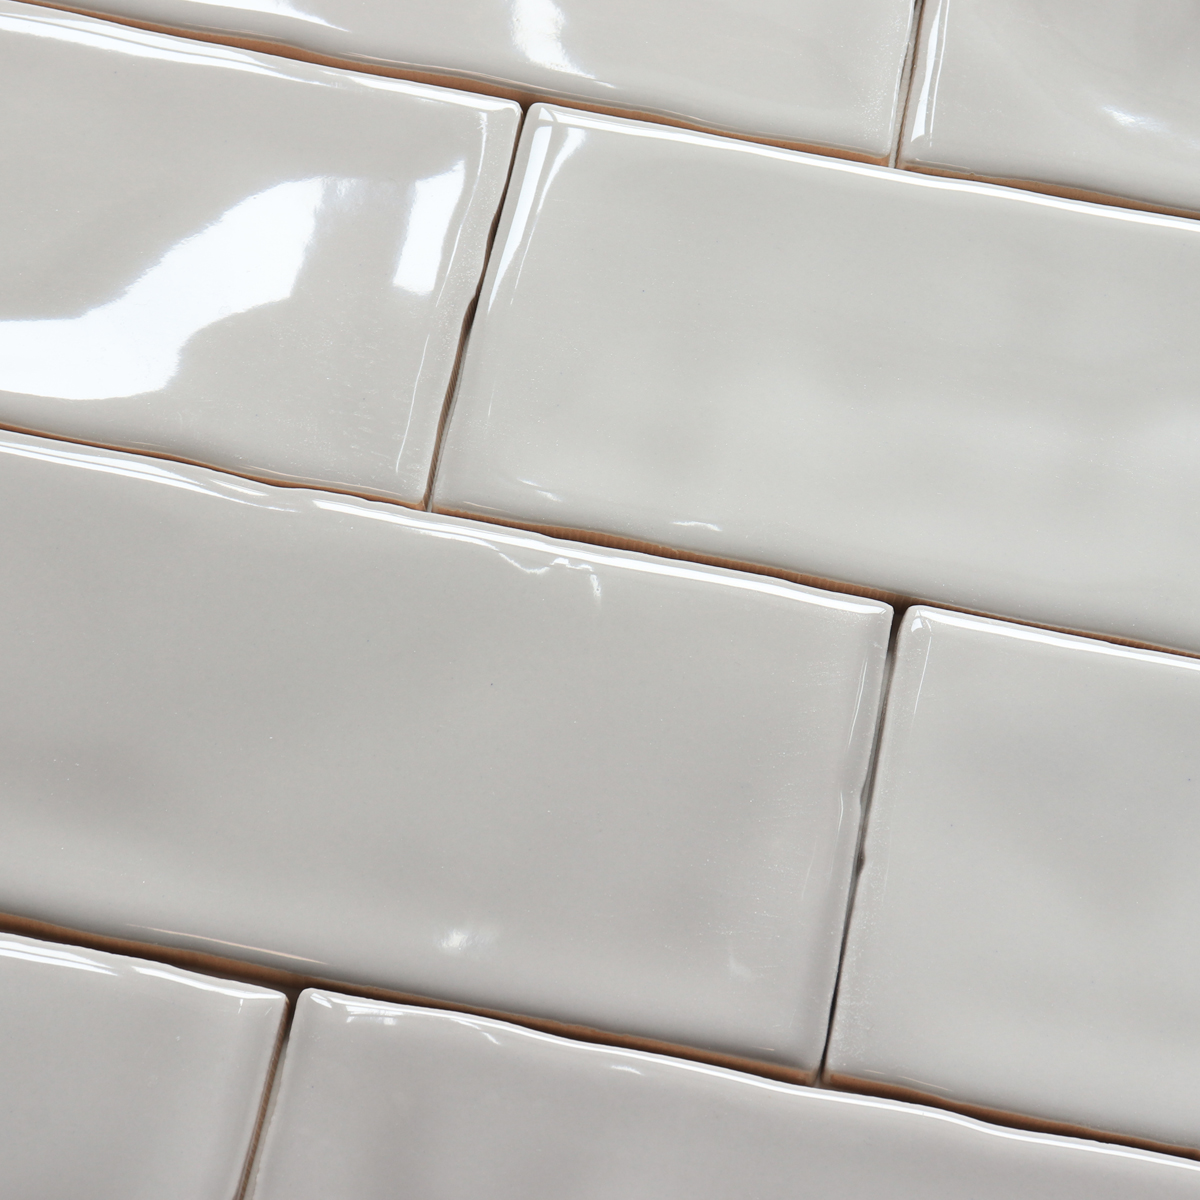 Lanka ceramic subway tiles bathroom set prices